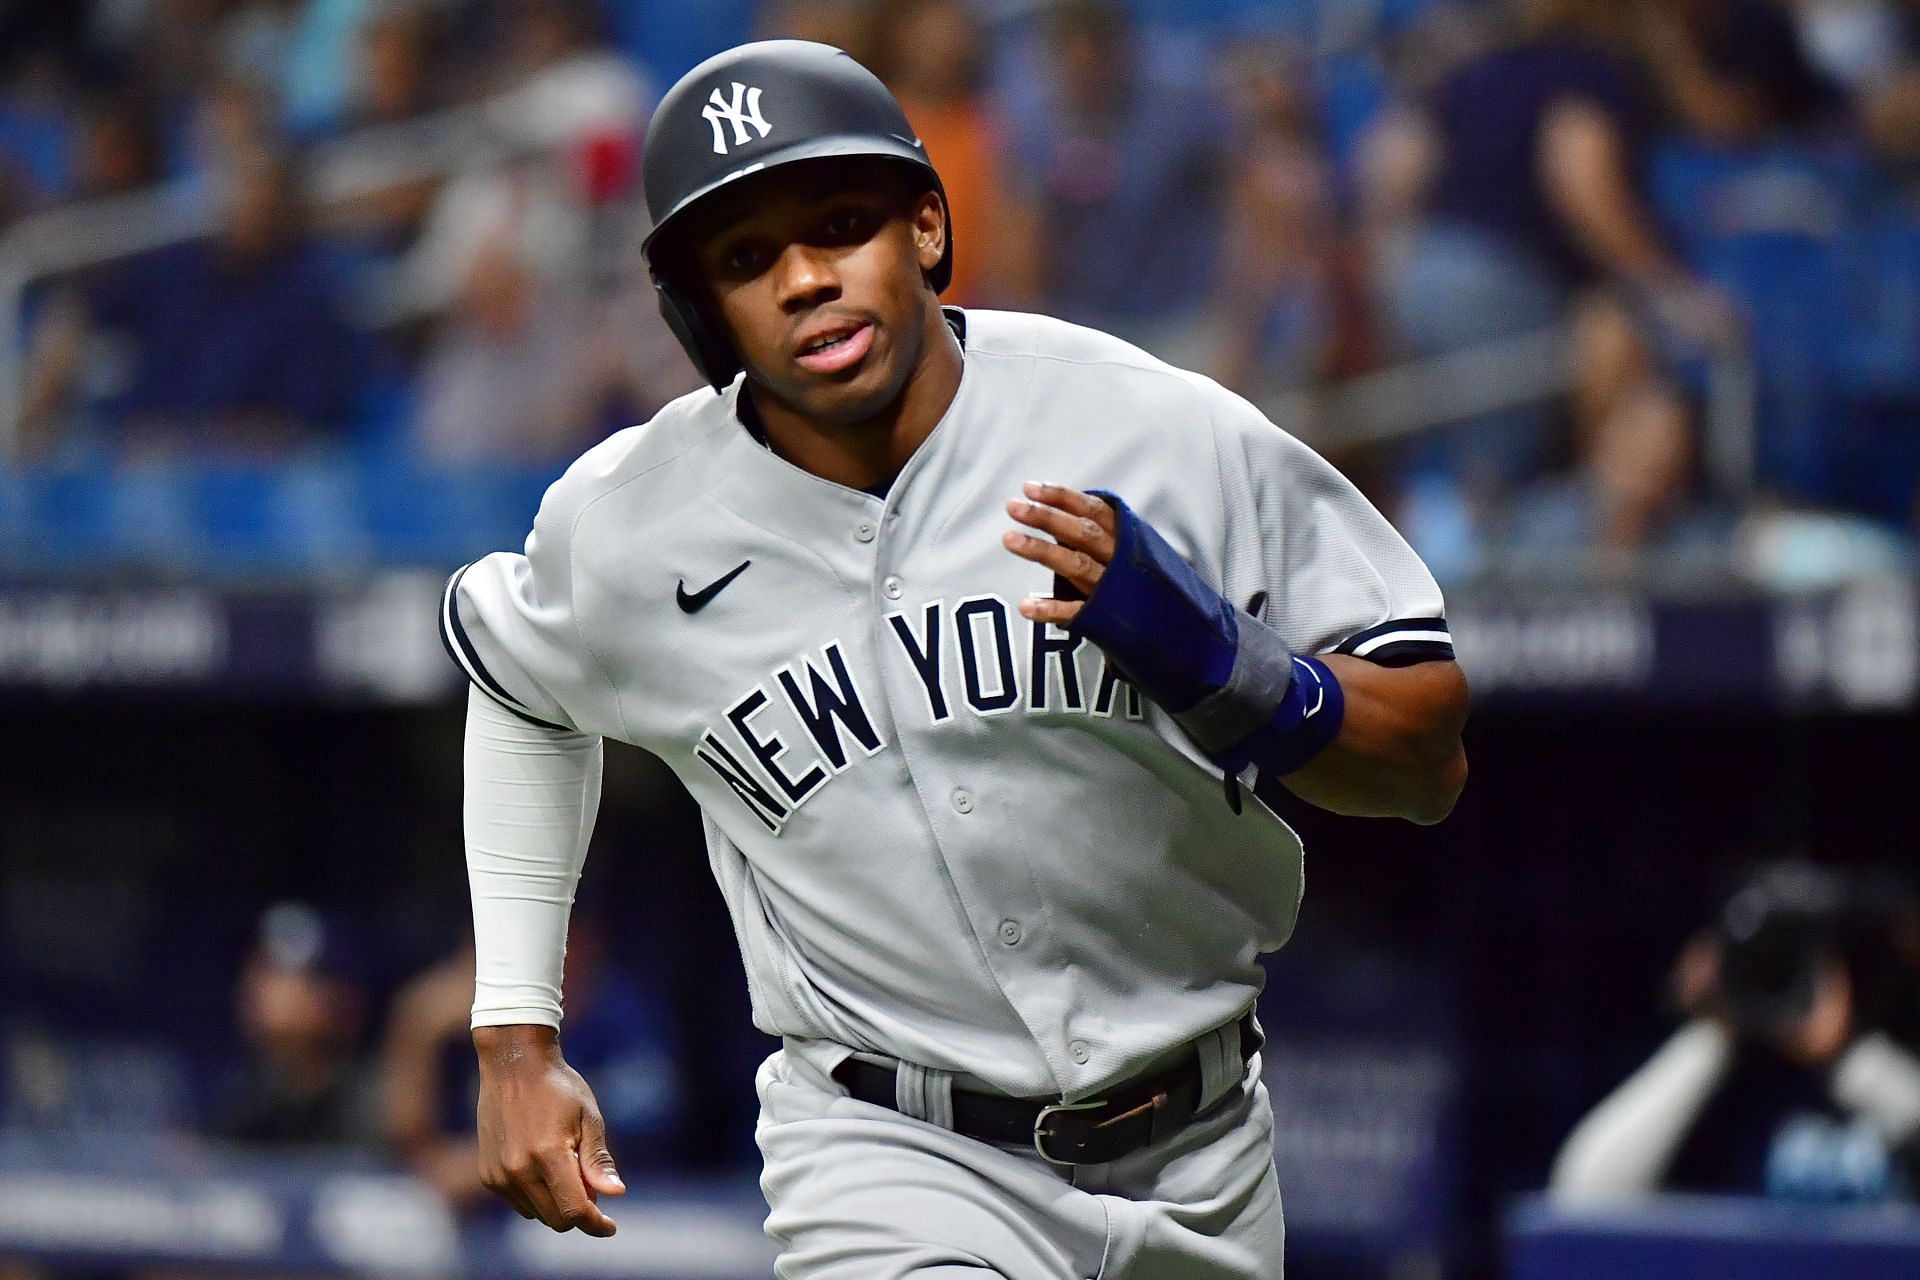 Organisation: New York Yankees